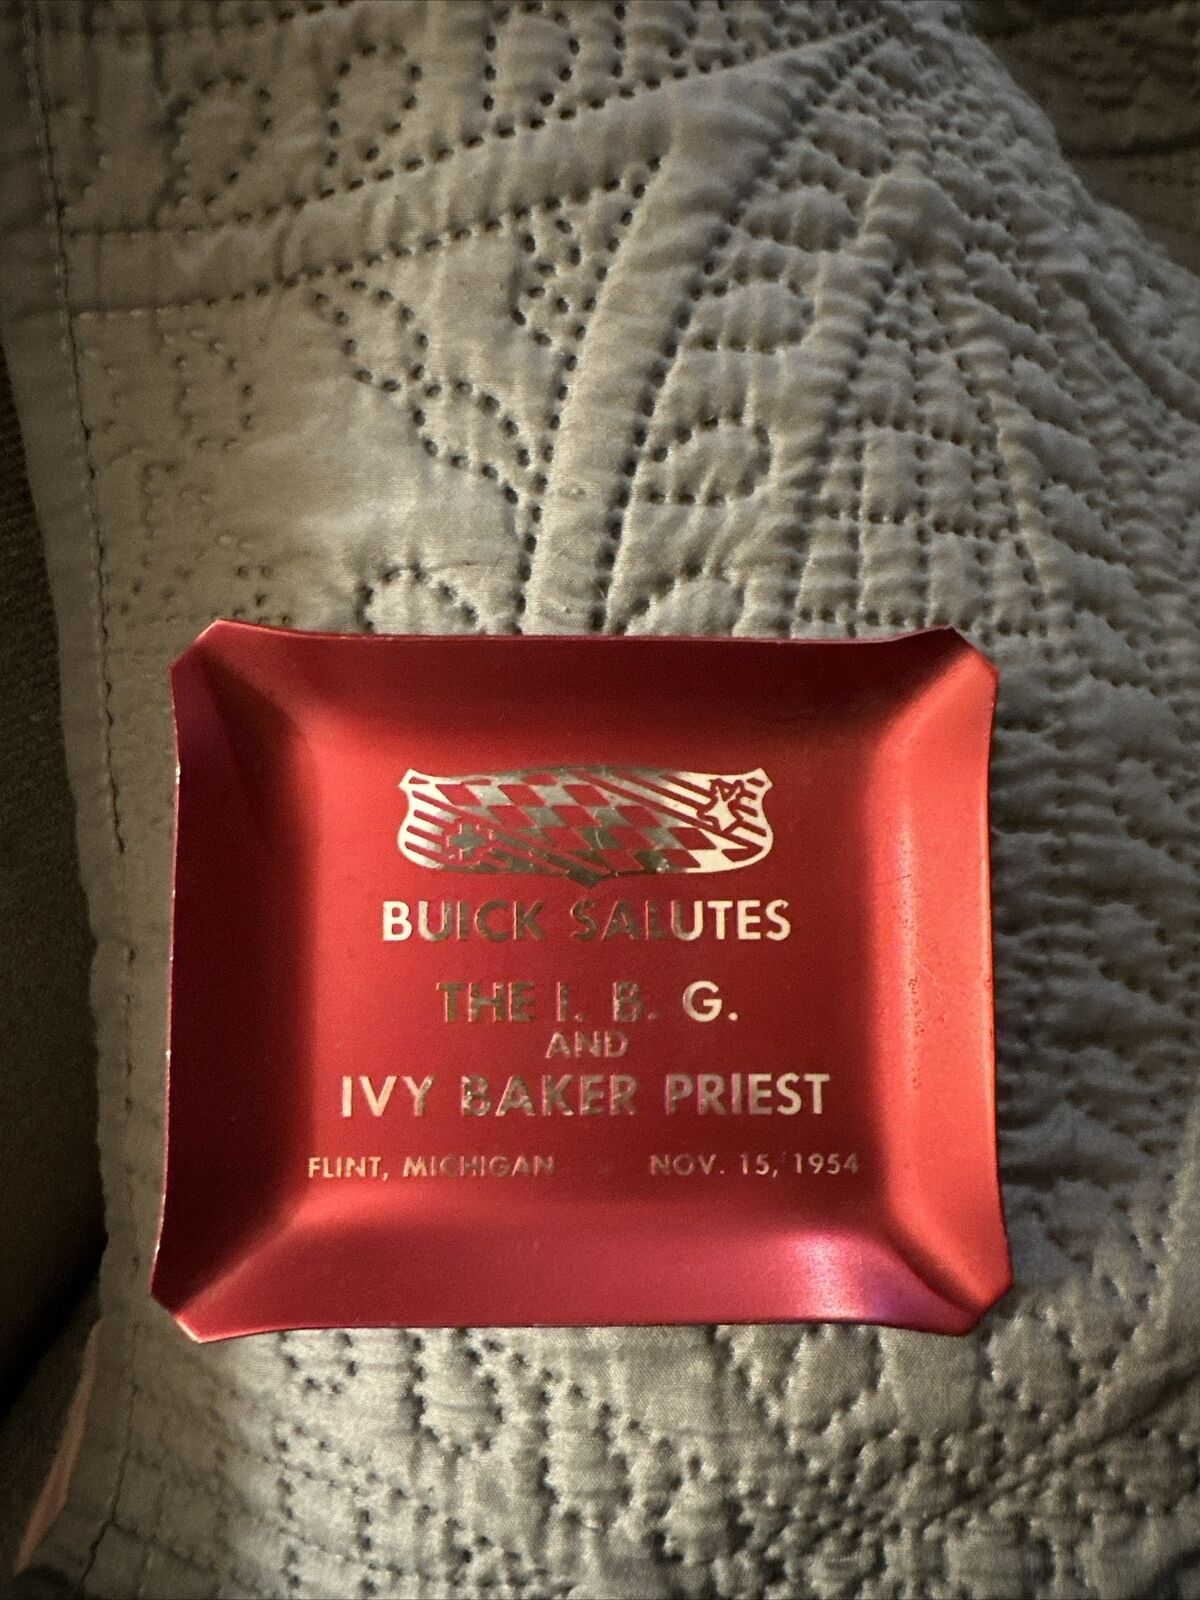 VTG 1954 BUICK SALUTES THE I.B.G. & IVY BAKER PRIEST FLINT MI. RED METAL ASHTRAY